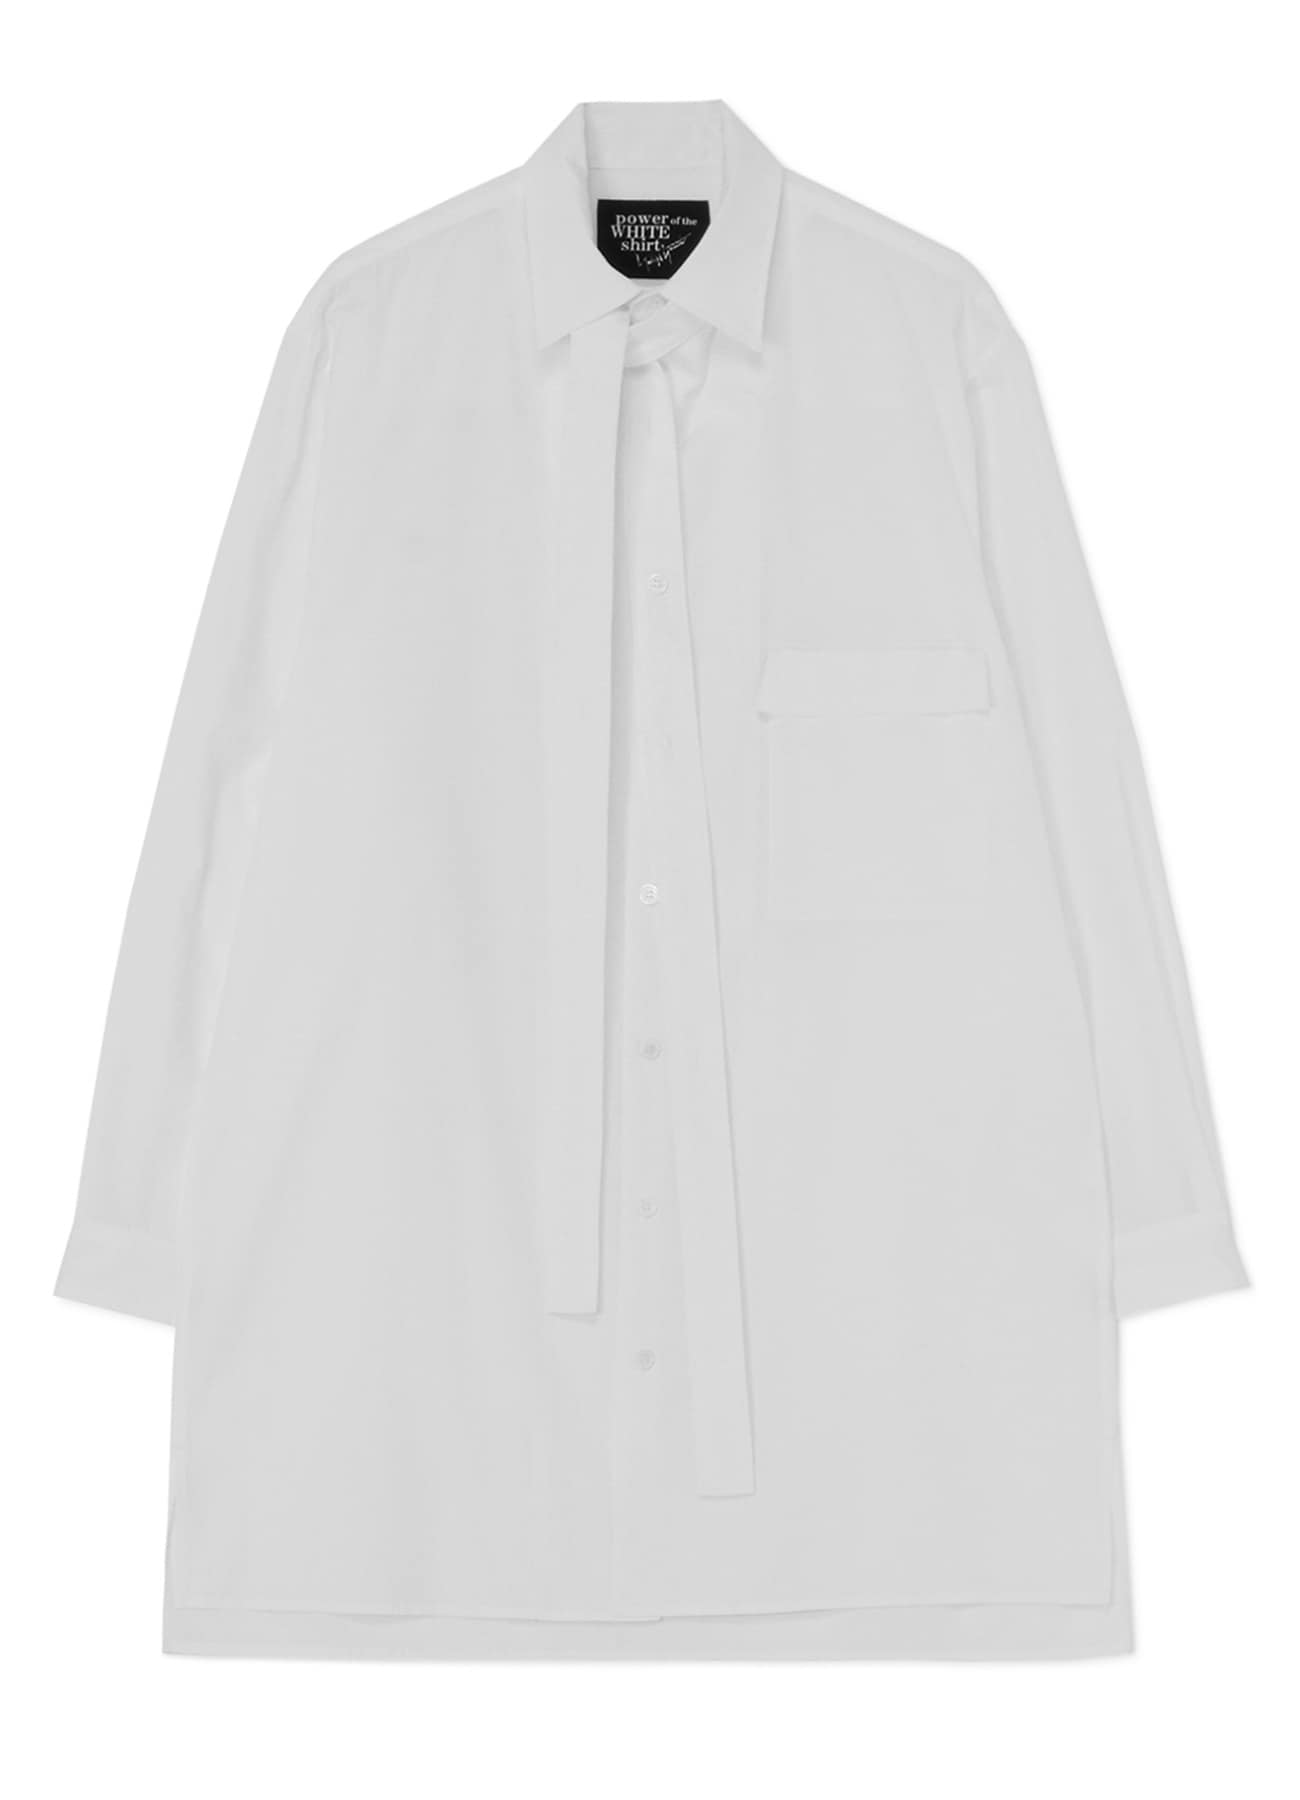 P・100/2 BROAD M-LONG COLLAR B(S White): power of the WHITE shirt